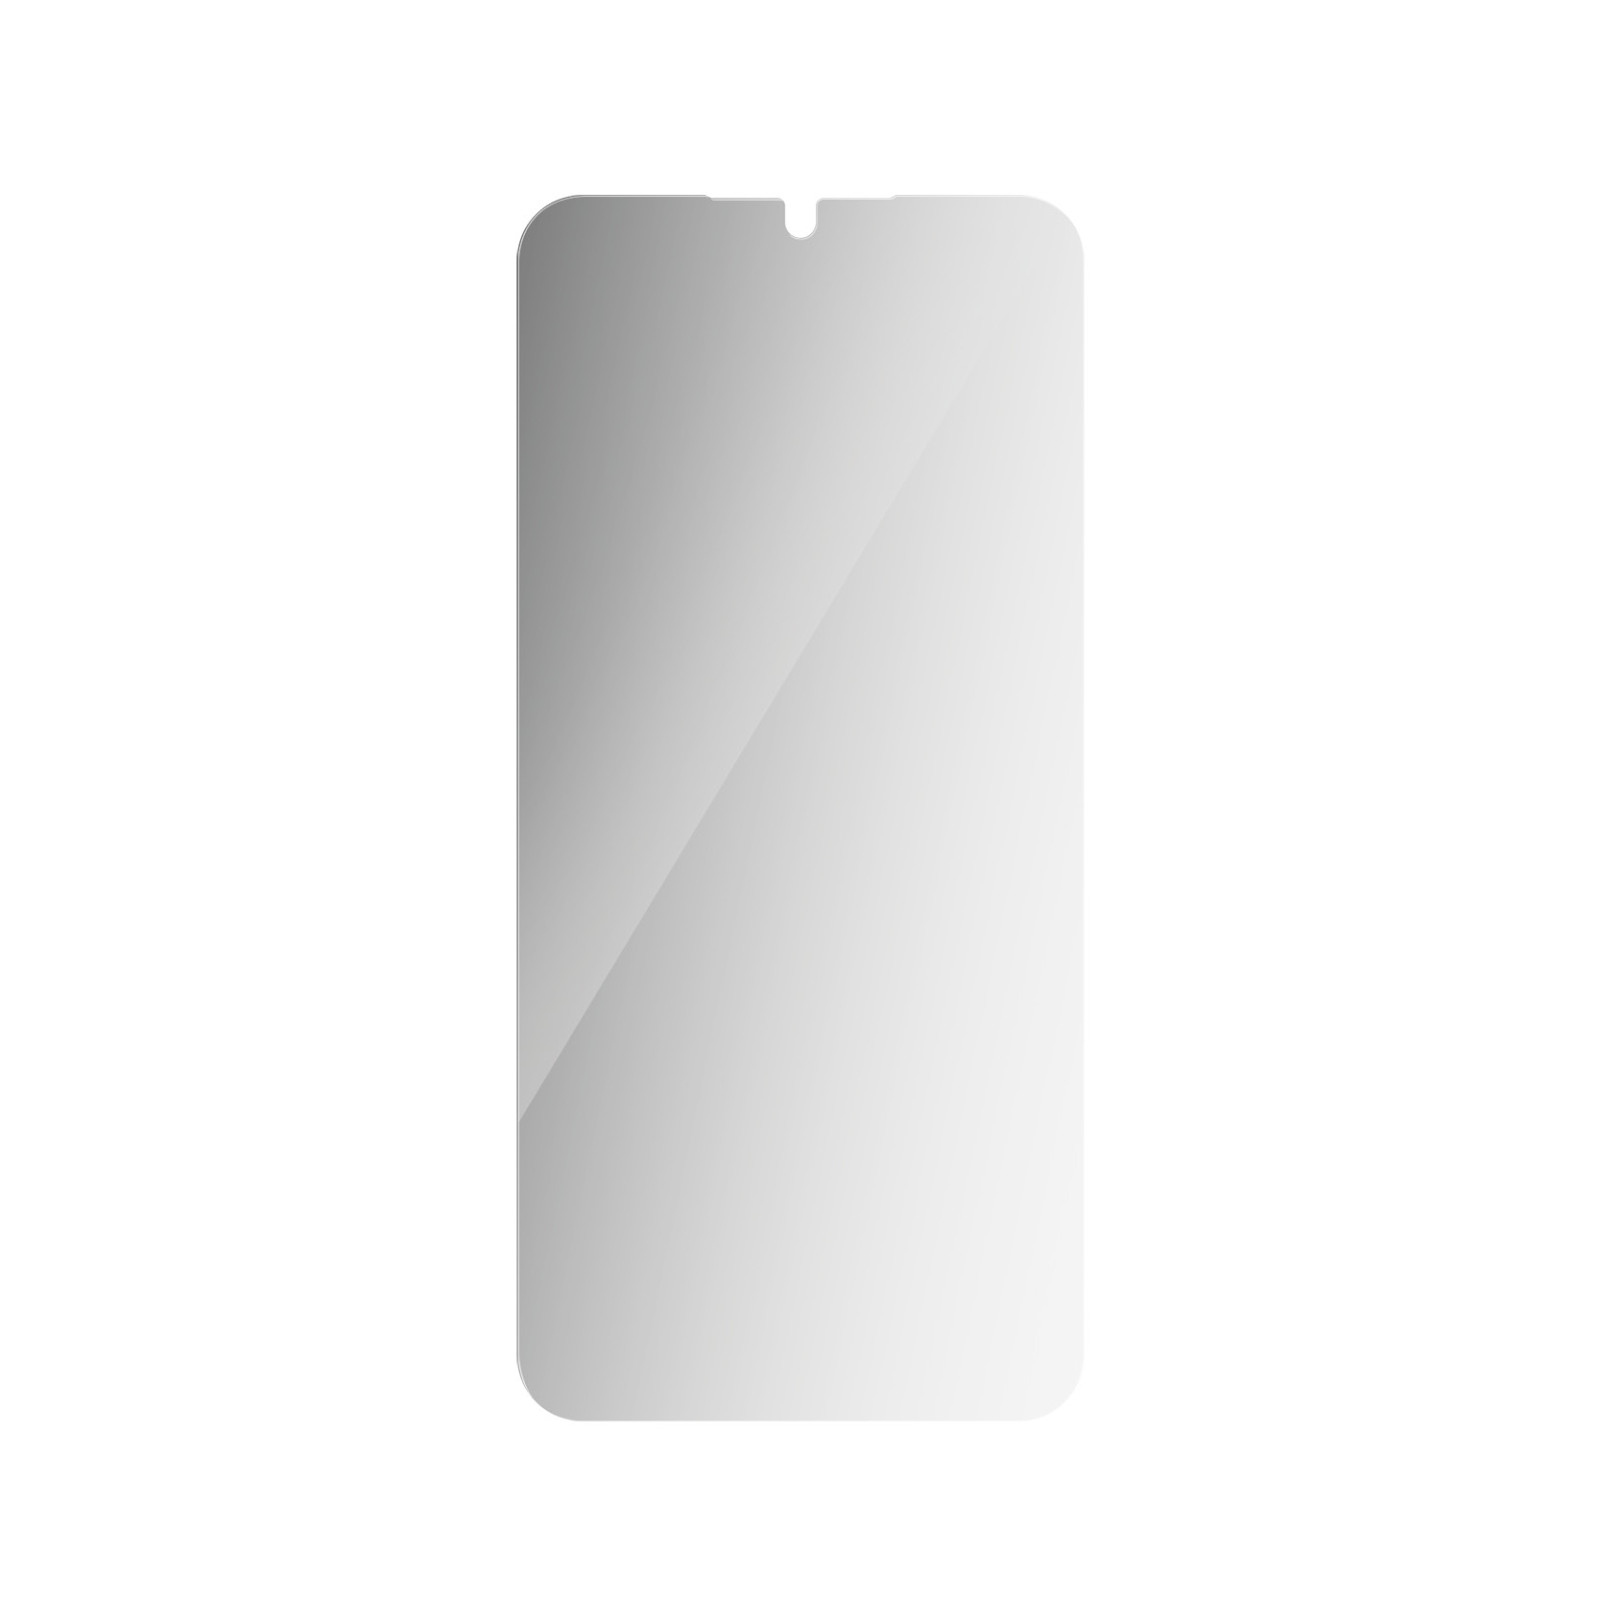 Стъклен протектор PanzerGlass за Samsung Galaxy A15, A15 5G, Privacy, Recycled, UWF, Черен